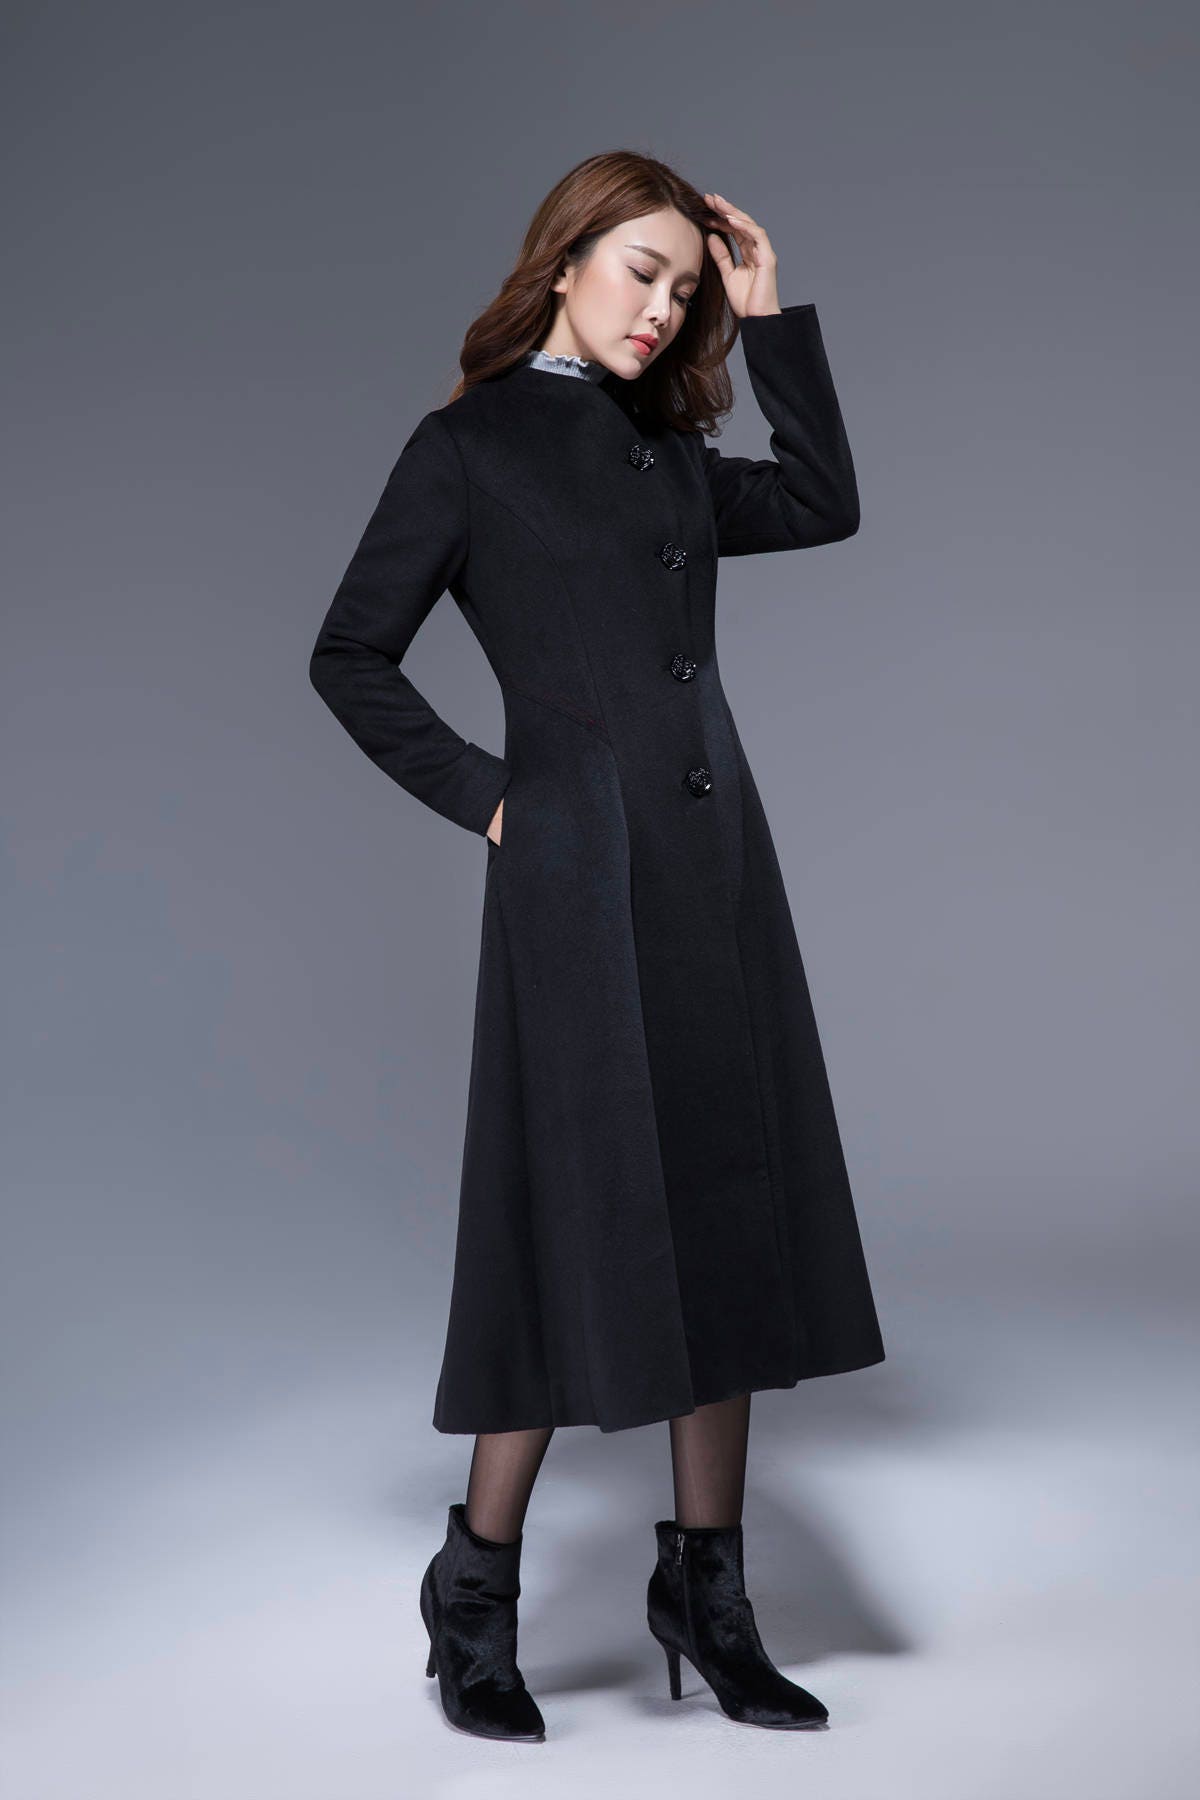 black winter coat long wool coat midi coat warm jacket | Etsy